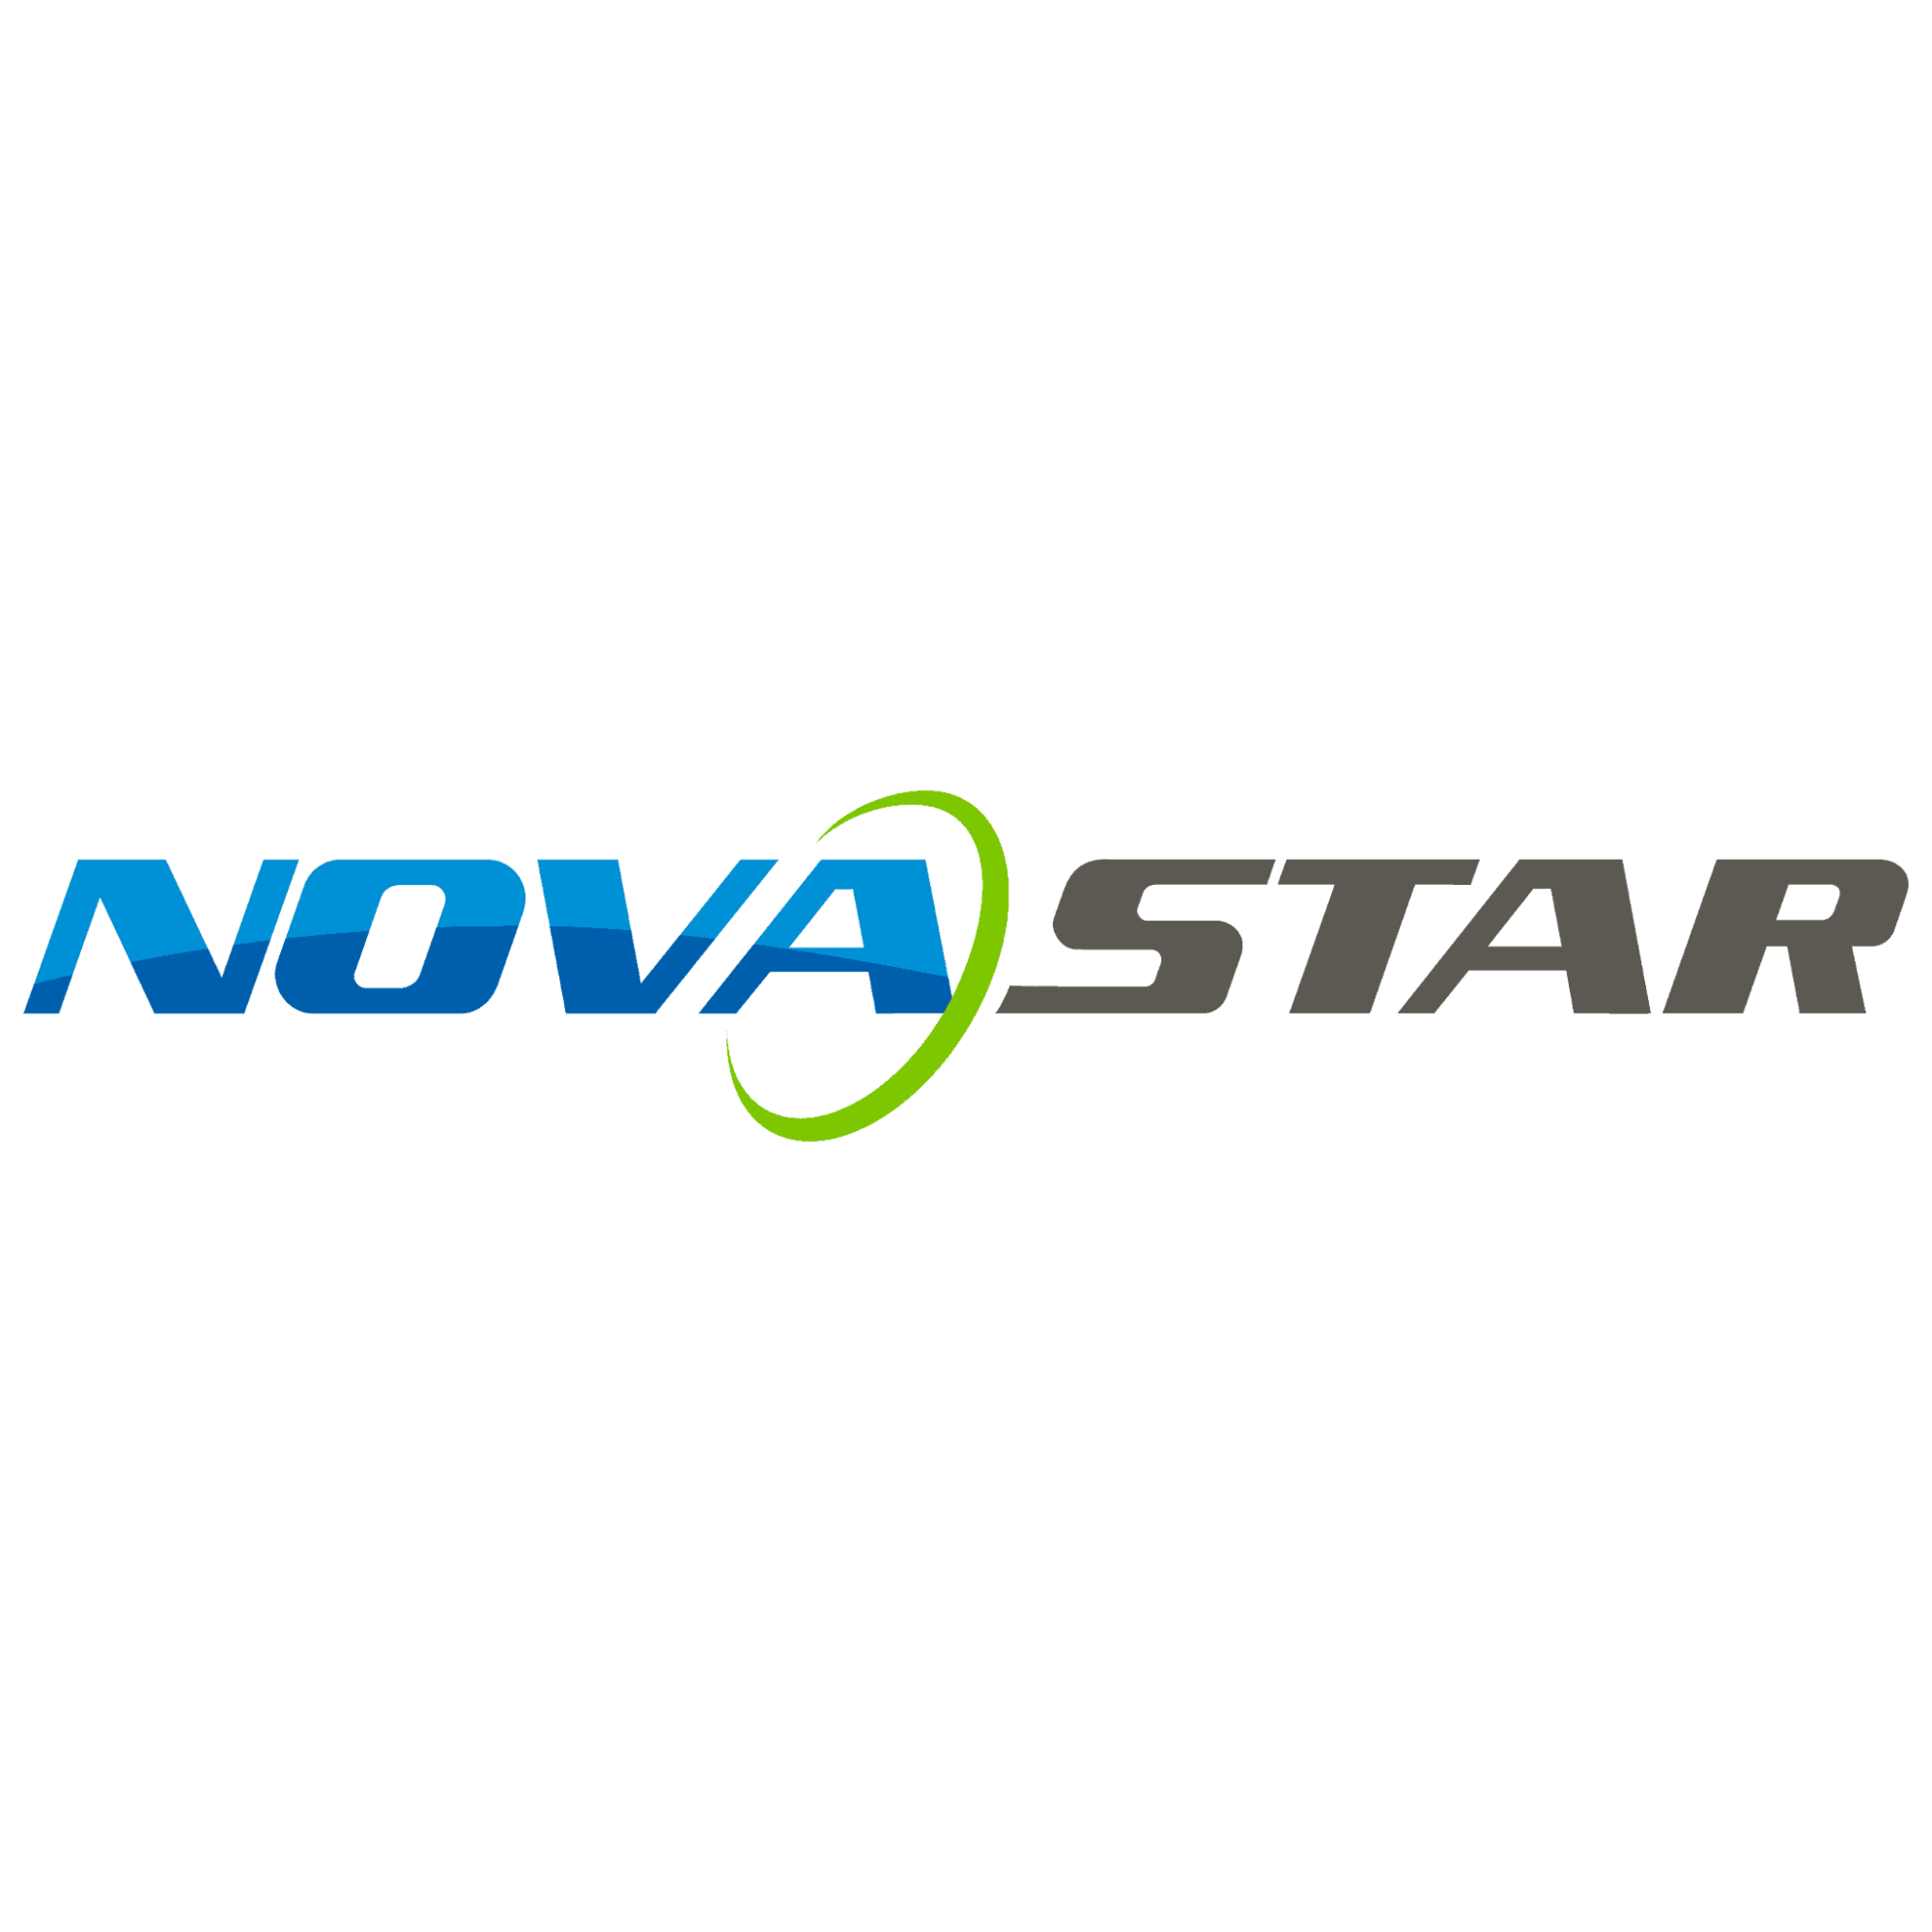 Nova логотип. НОВАСТАР лого. Nova Star logo. Компания Cyberia Nova лого.